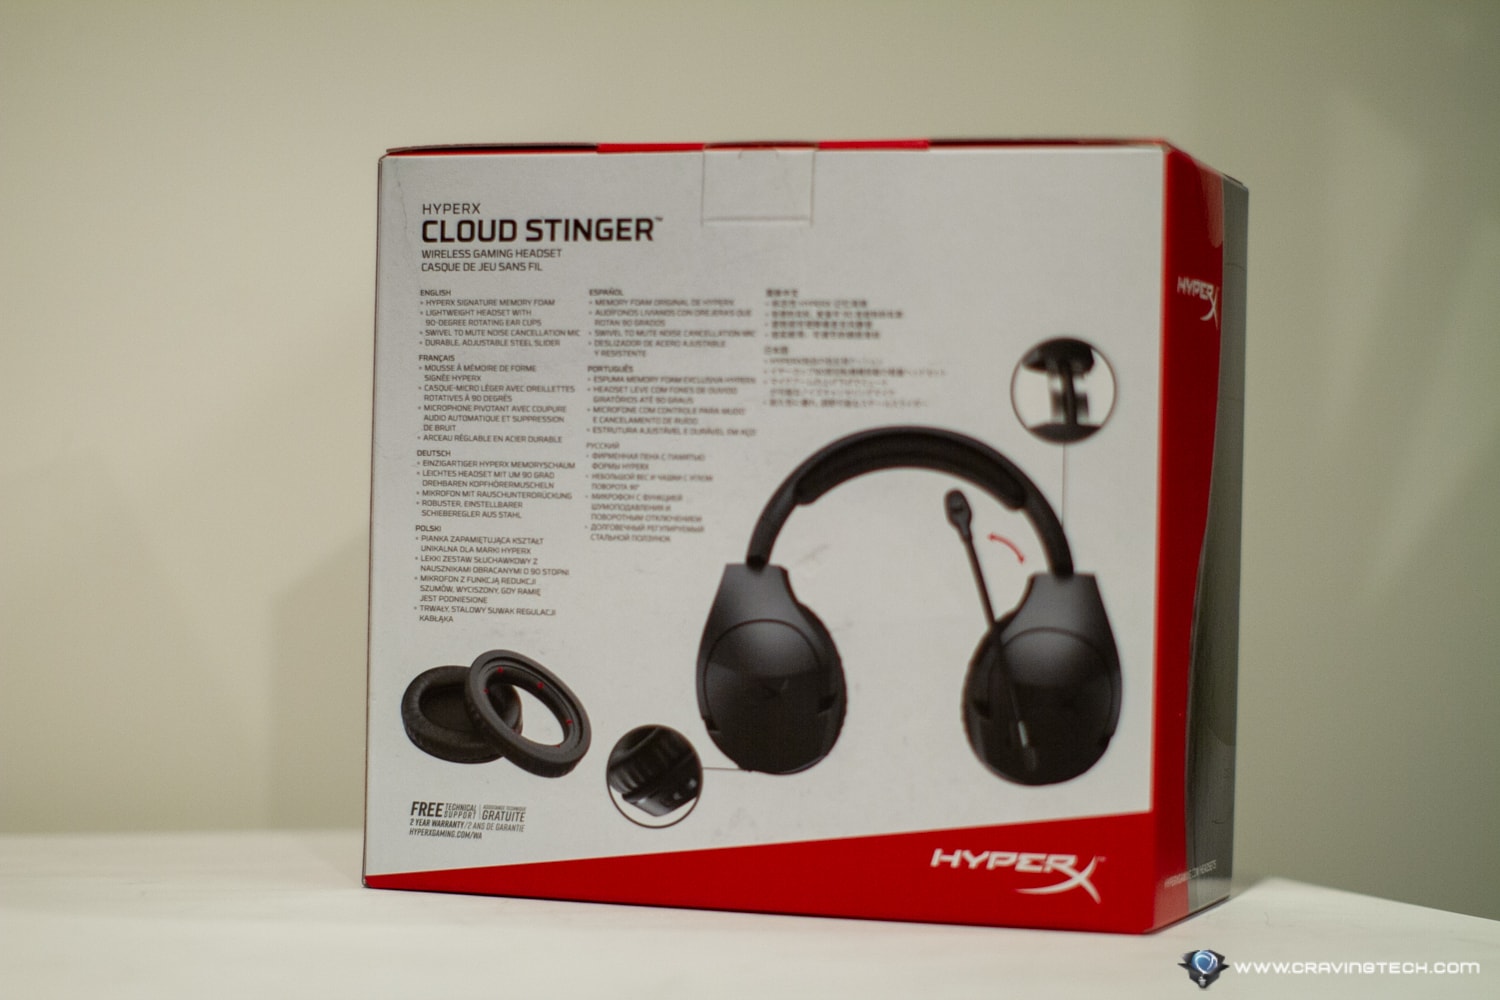 HyperX Cloud Stinger Wireless Gaming Headset Packaging